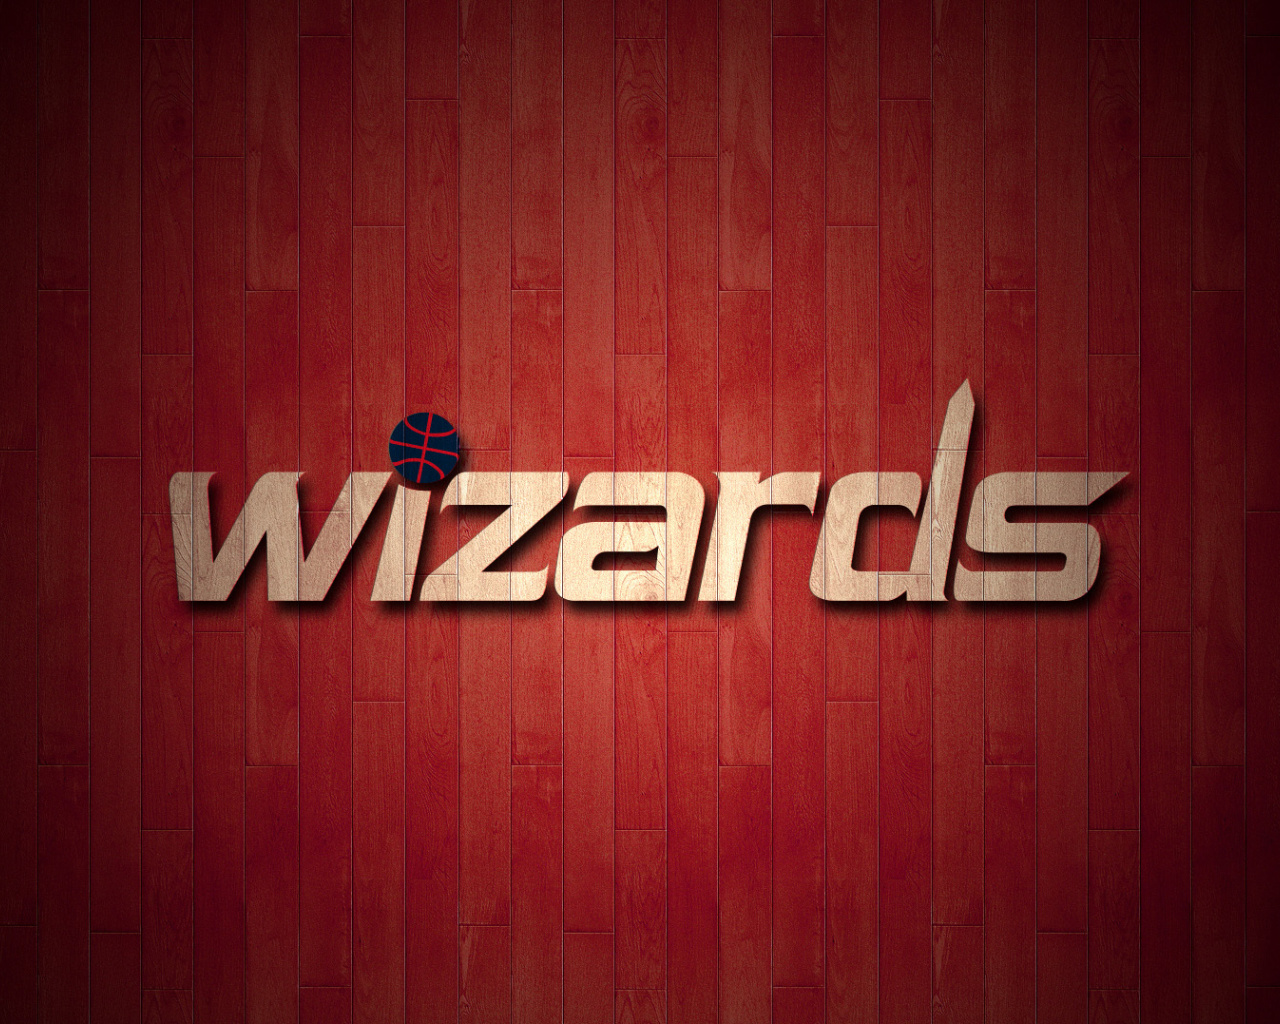 Washington Wizards wallpaper 1280x1024